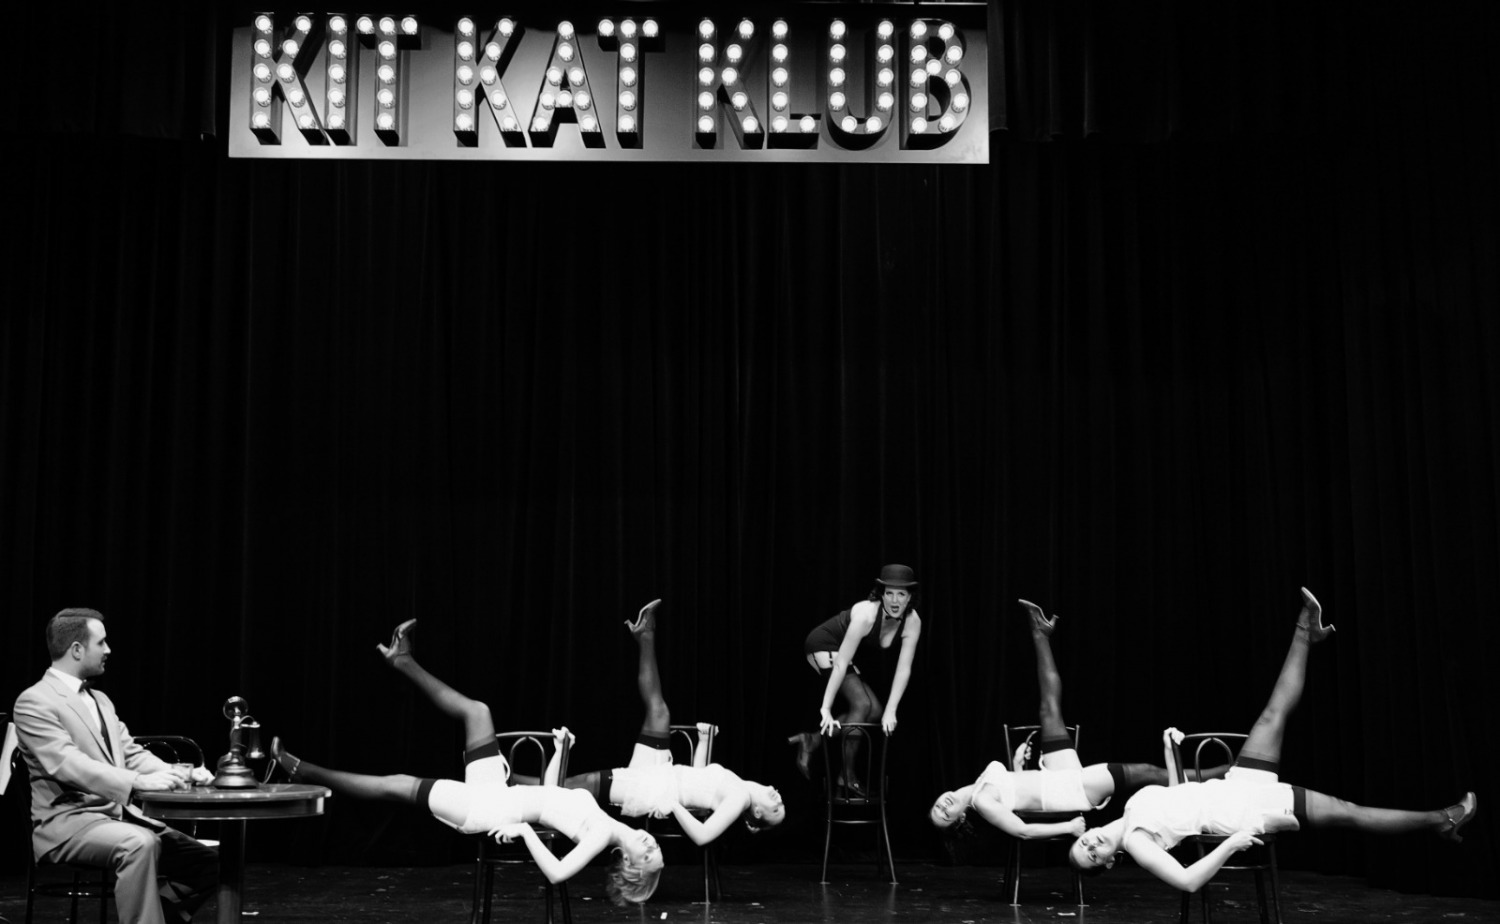 Cabaret - Das Musical - Stadttheater Kufstein / Bild: Sylvia Grösswang